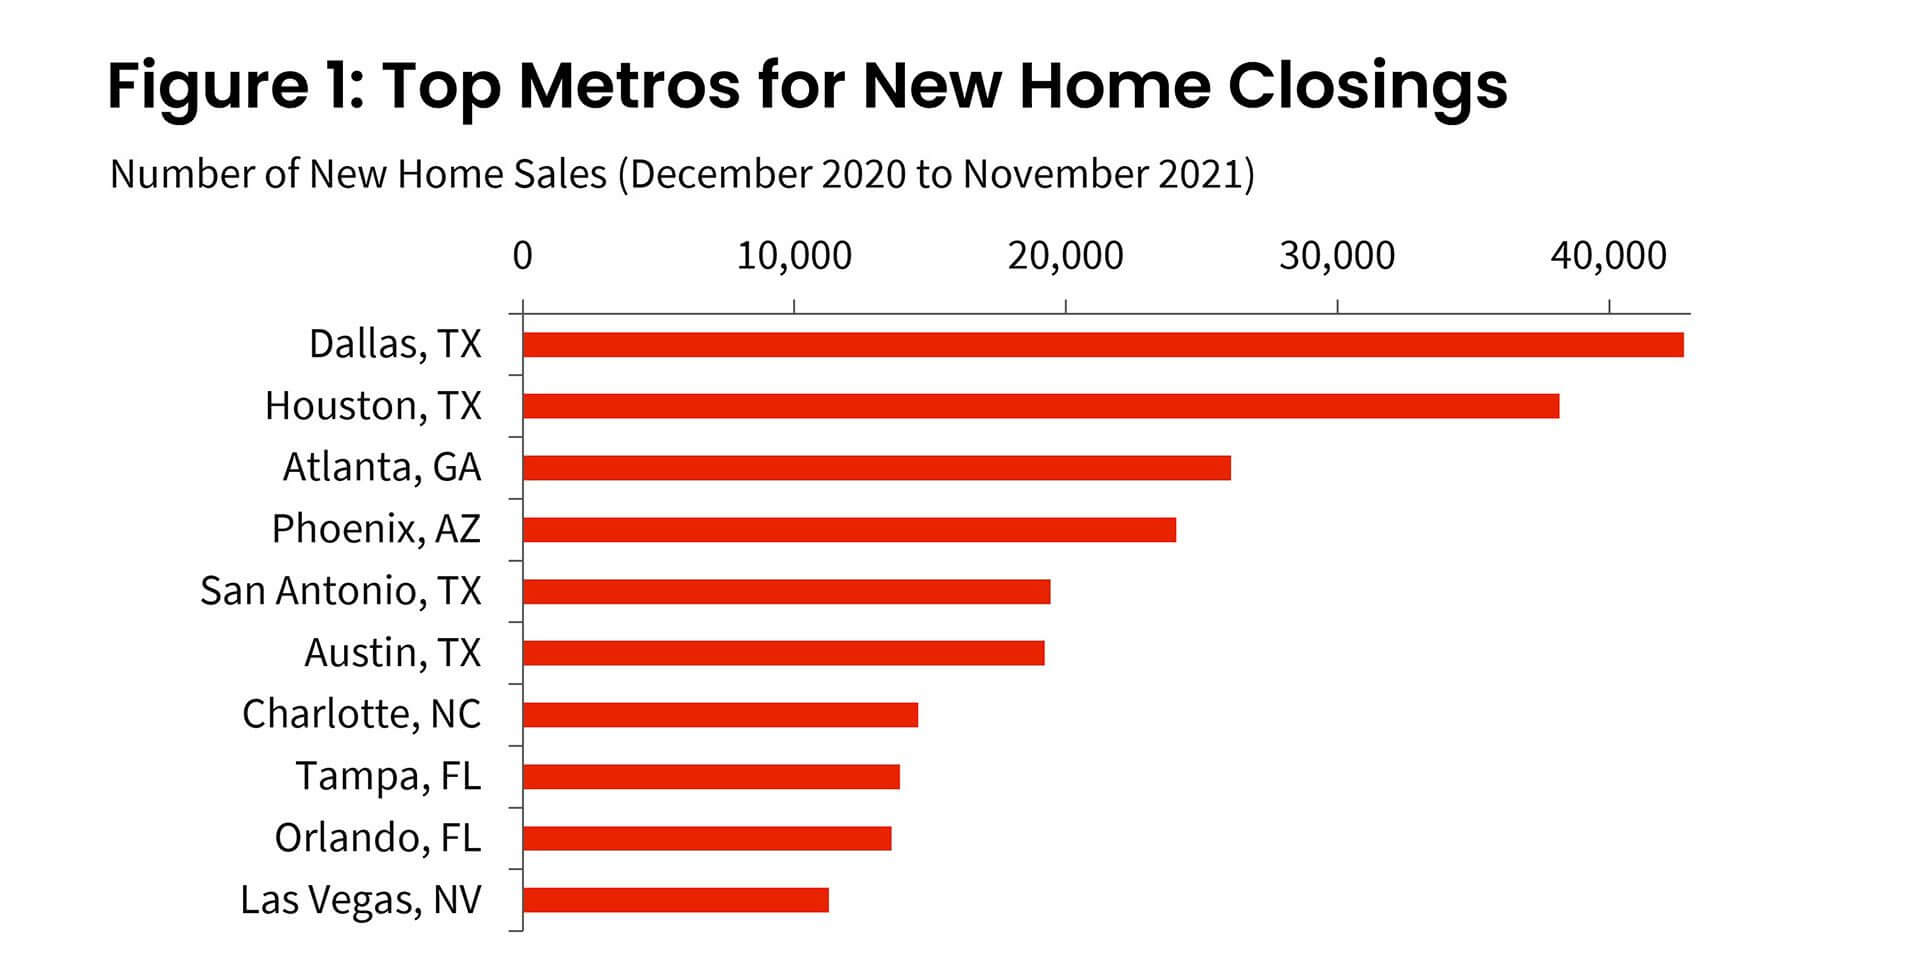 Figure 1: Top Metros for New Home Closings